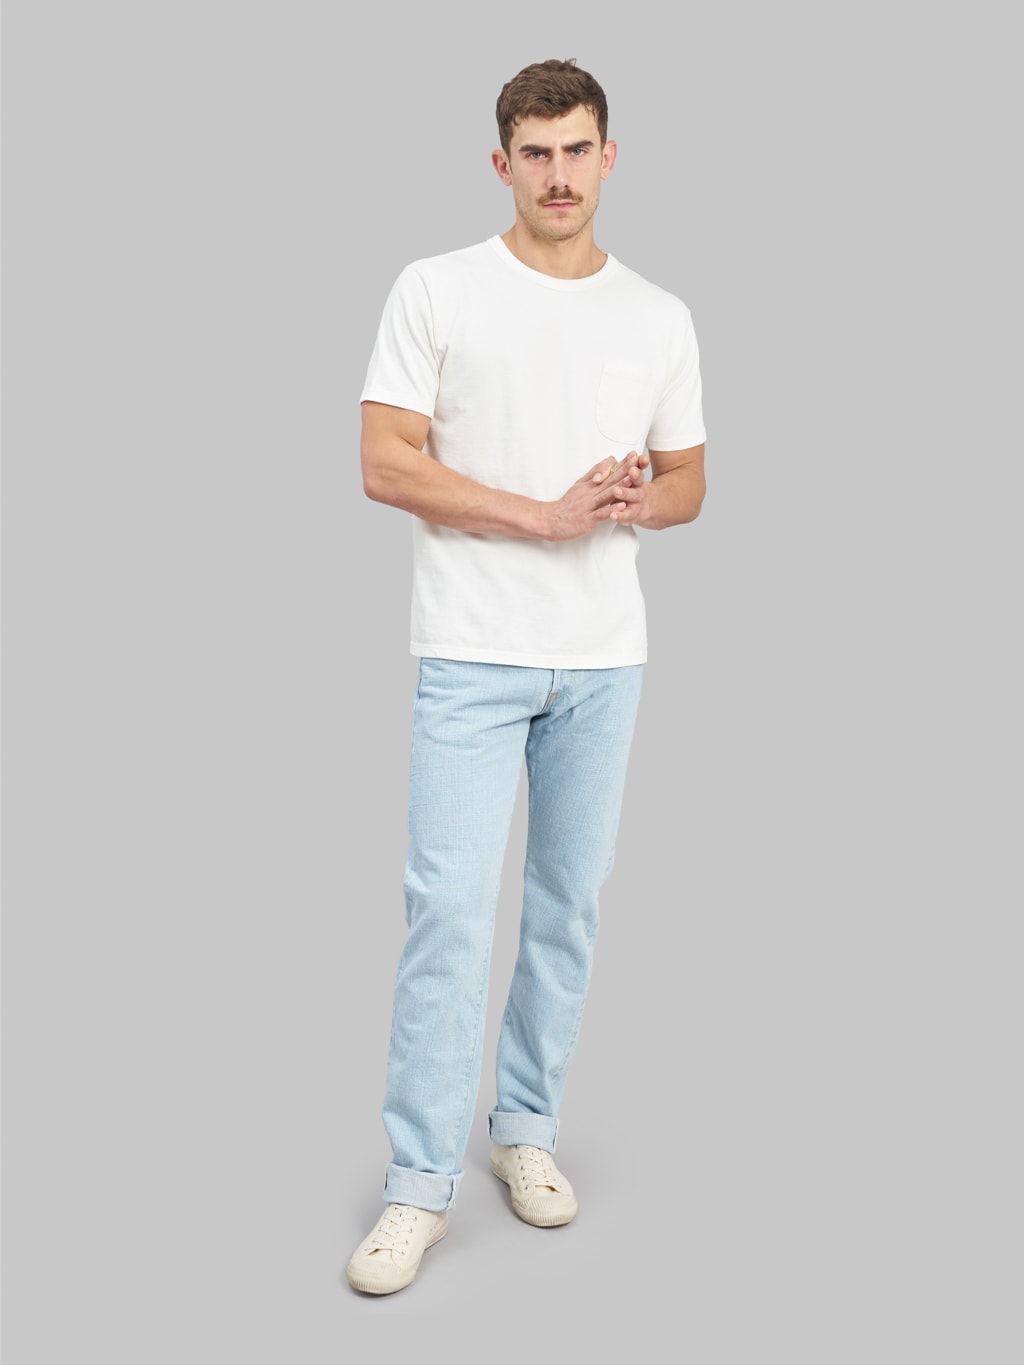 redcast heritage x oni denim kerama blue 15oz selvedge jeans style